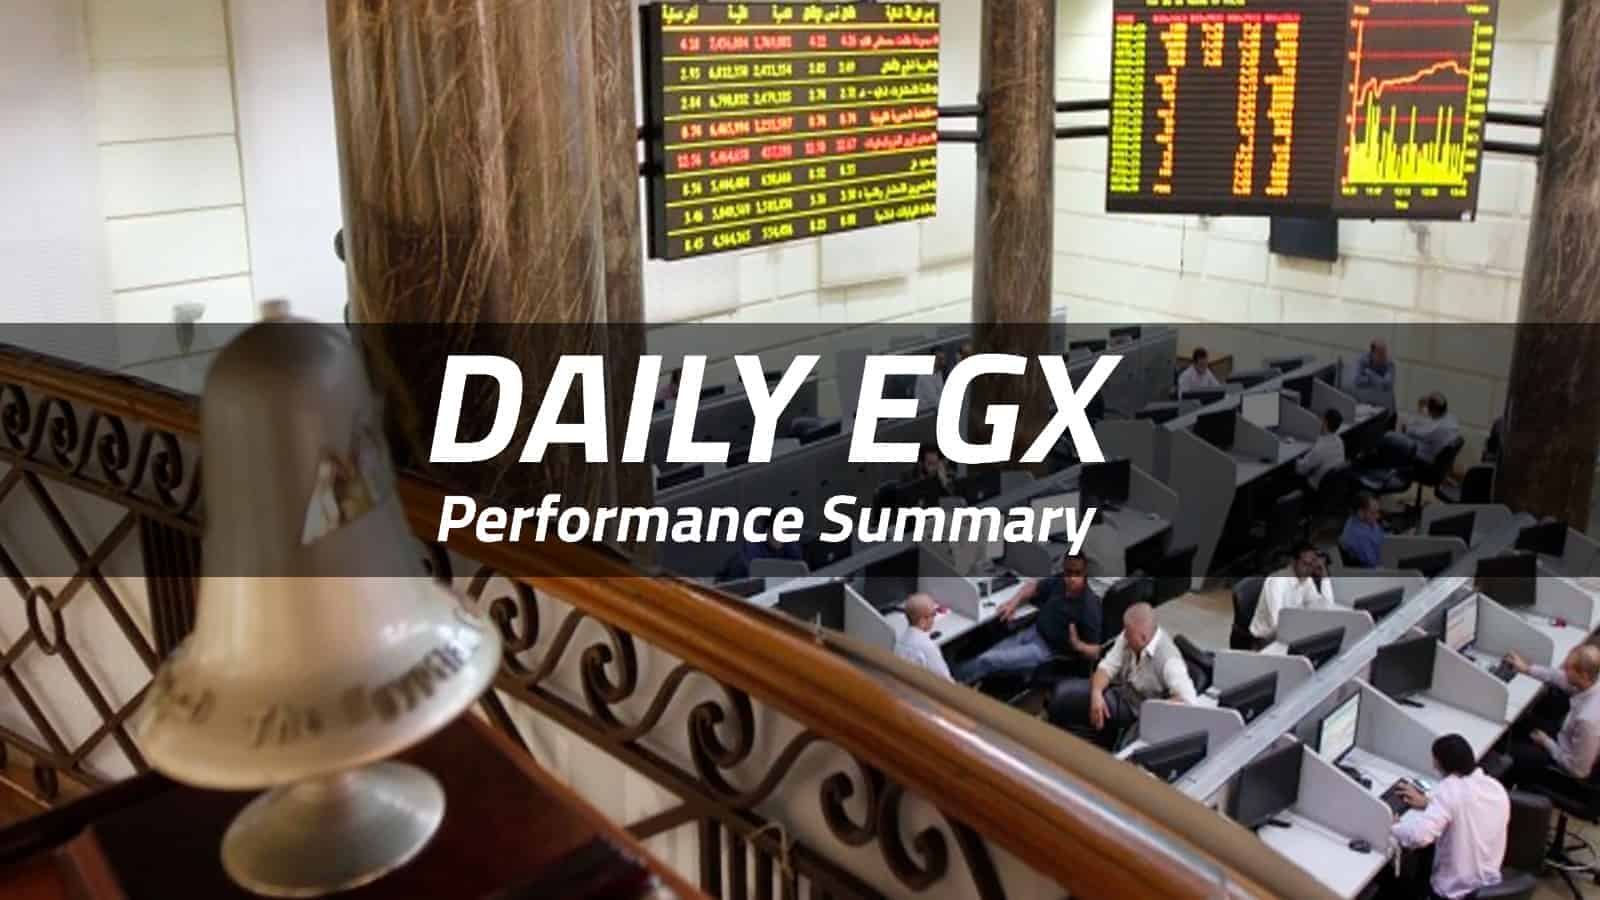 EGX sees bullish trend on Wednesday with EGX33 Shariah Index debut